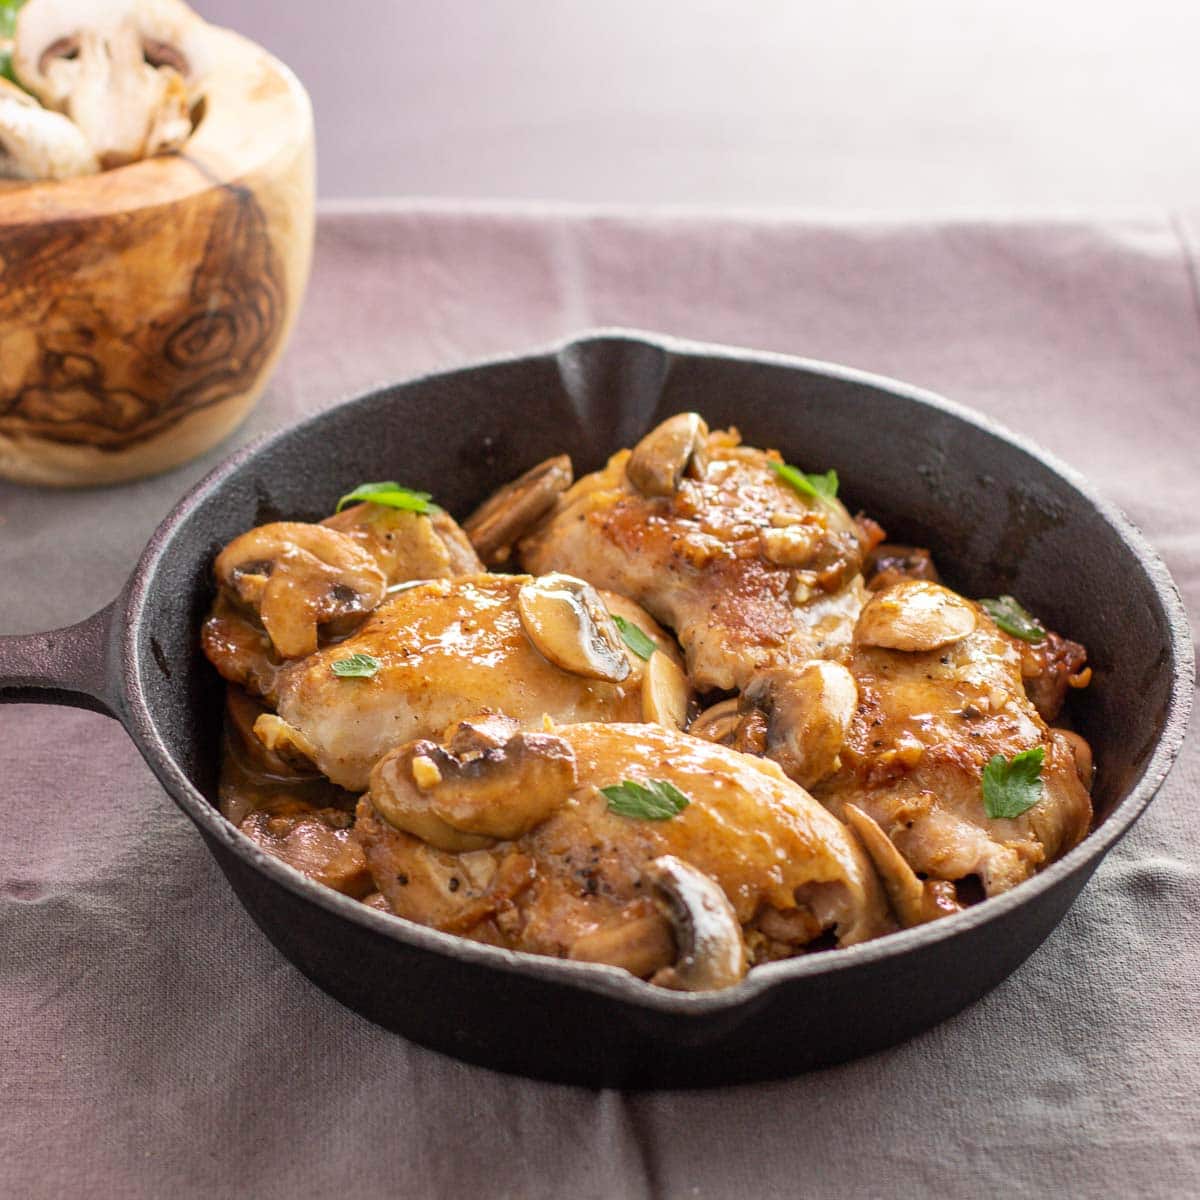 A castiron pan with chicken mushroom an garlic in a yummy sauce.